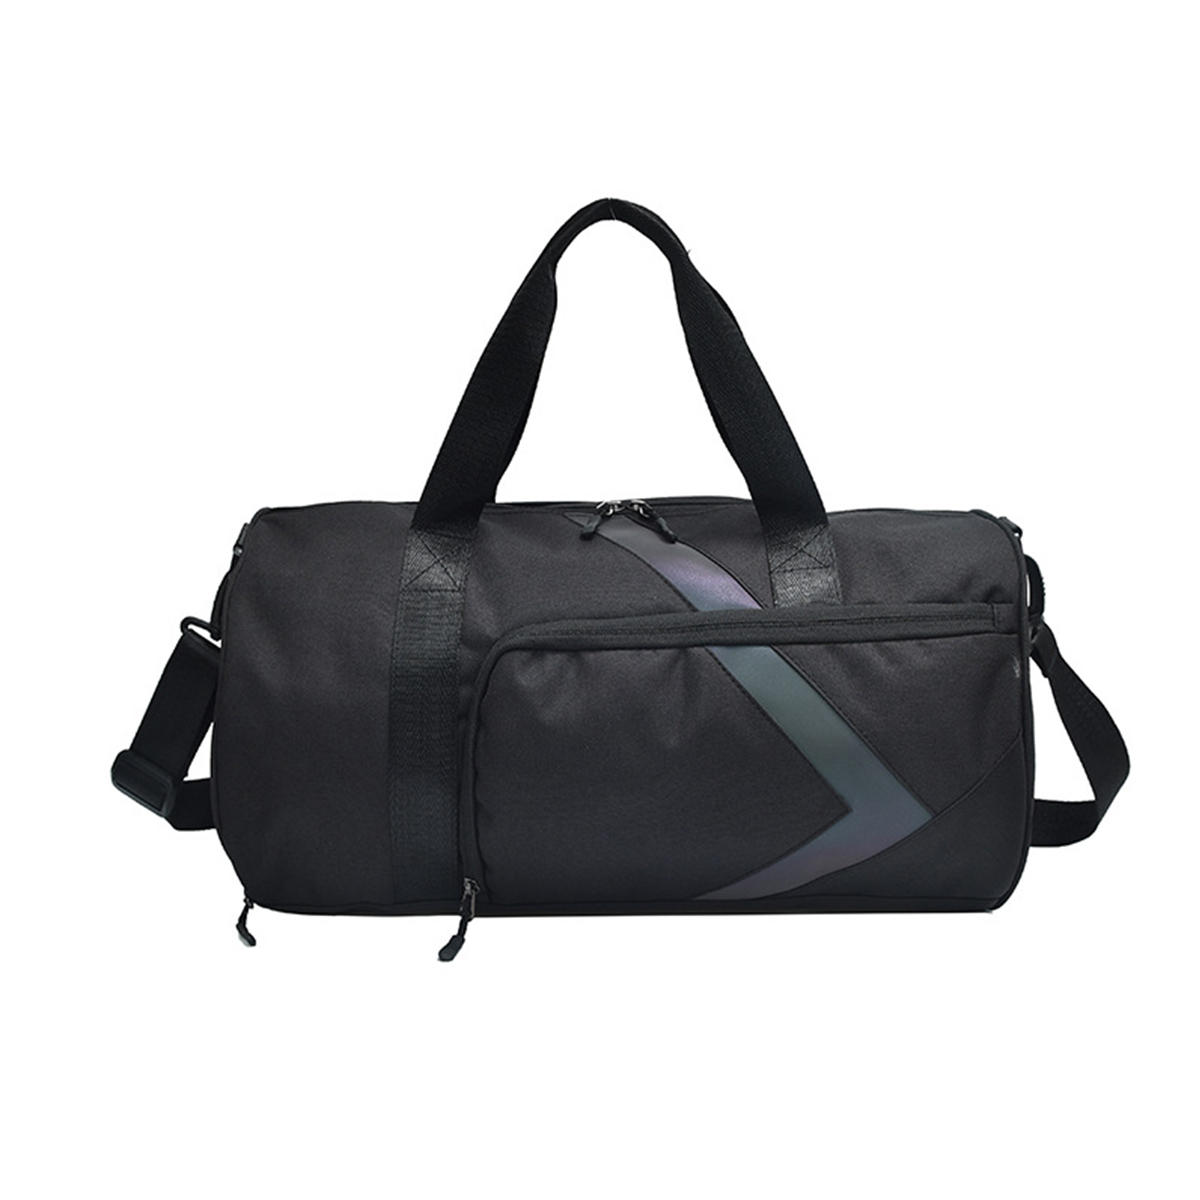 Dry Wet Separation Lightweight Portable Waterproof Folding Travel Gym Handbag Sports Running Fitness